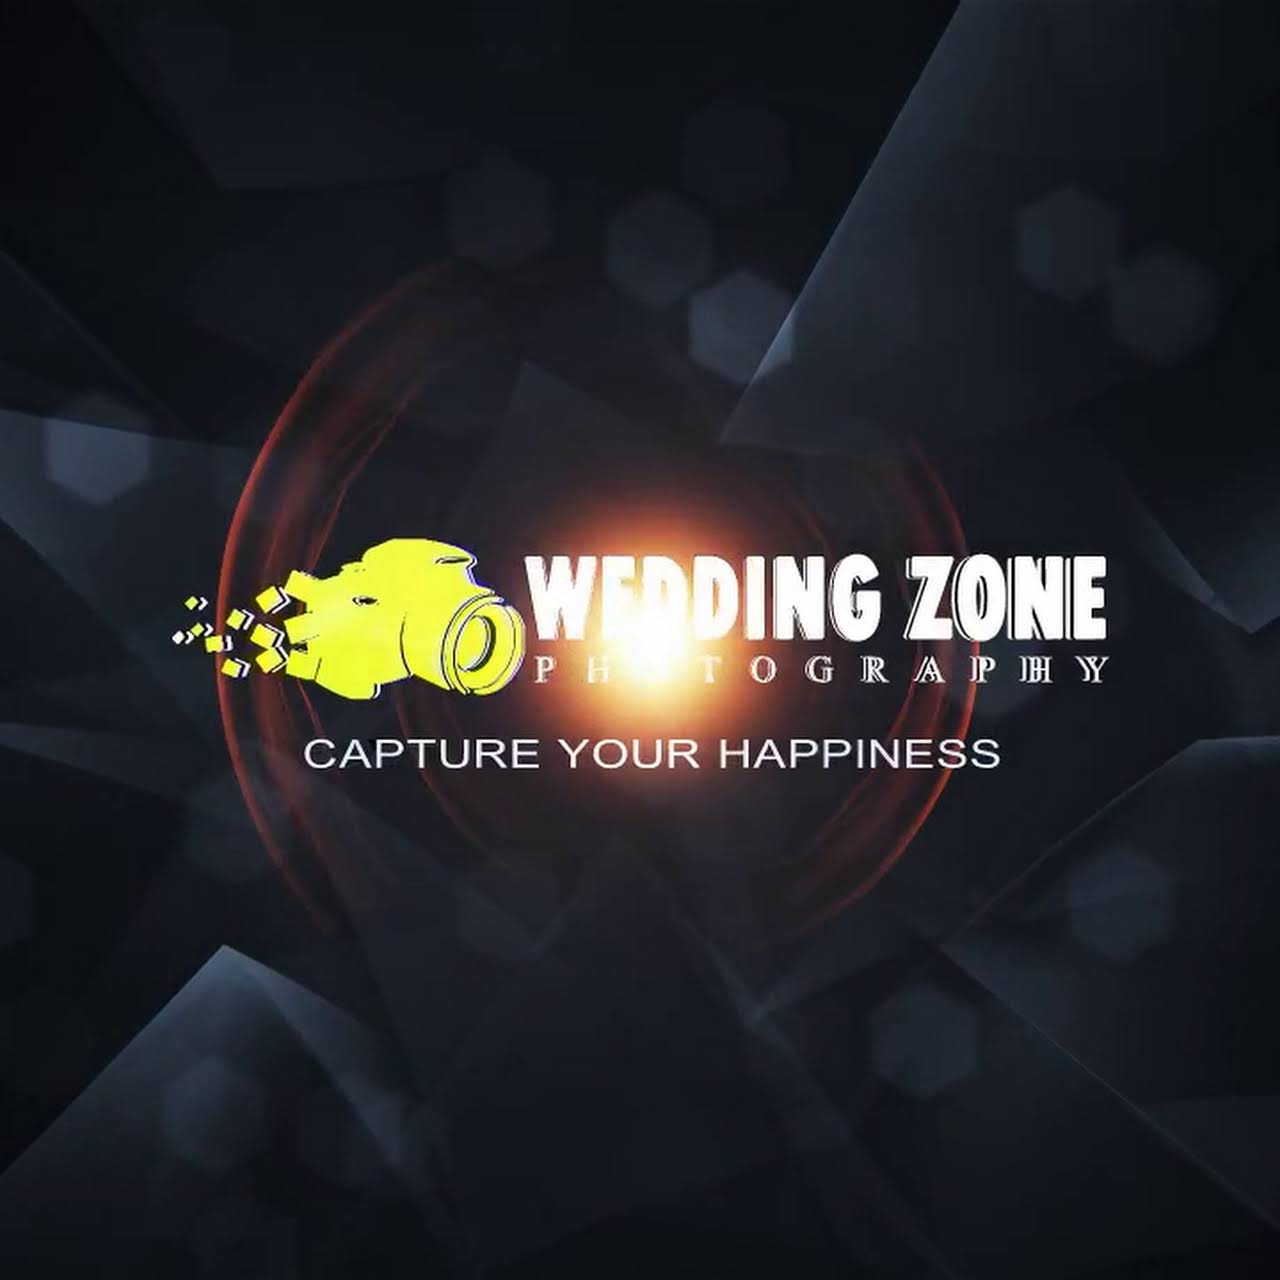 WEDDING ZONE PHOTOGRAPHY - Logo